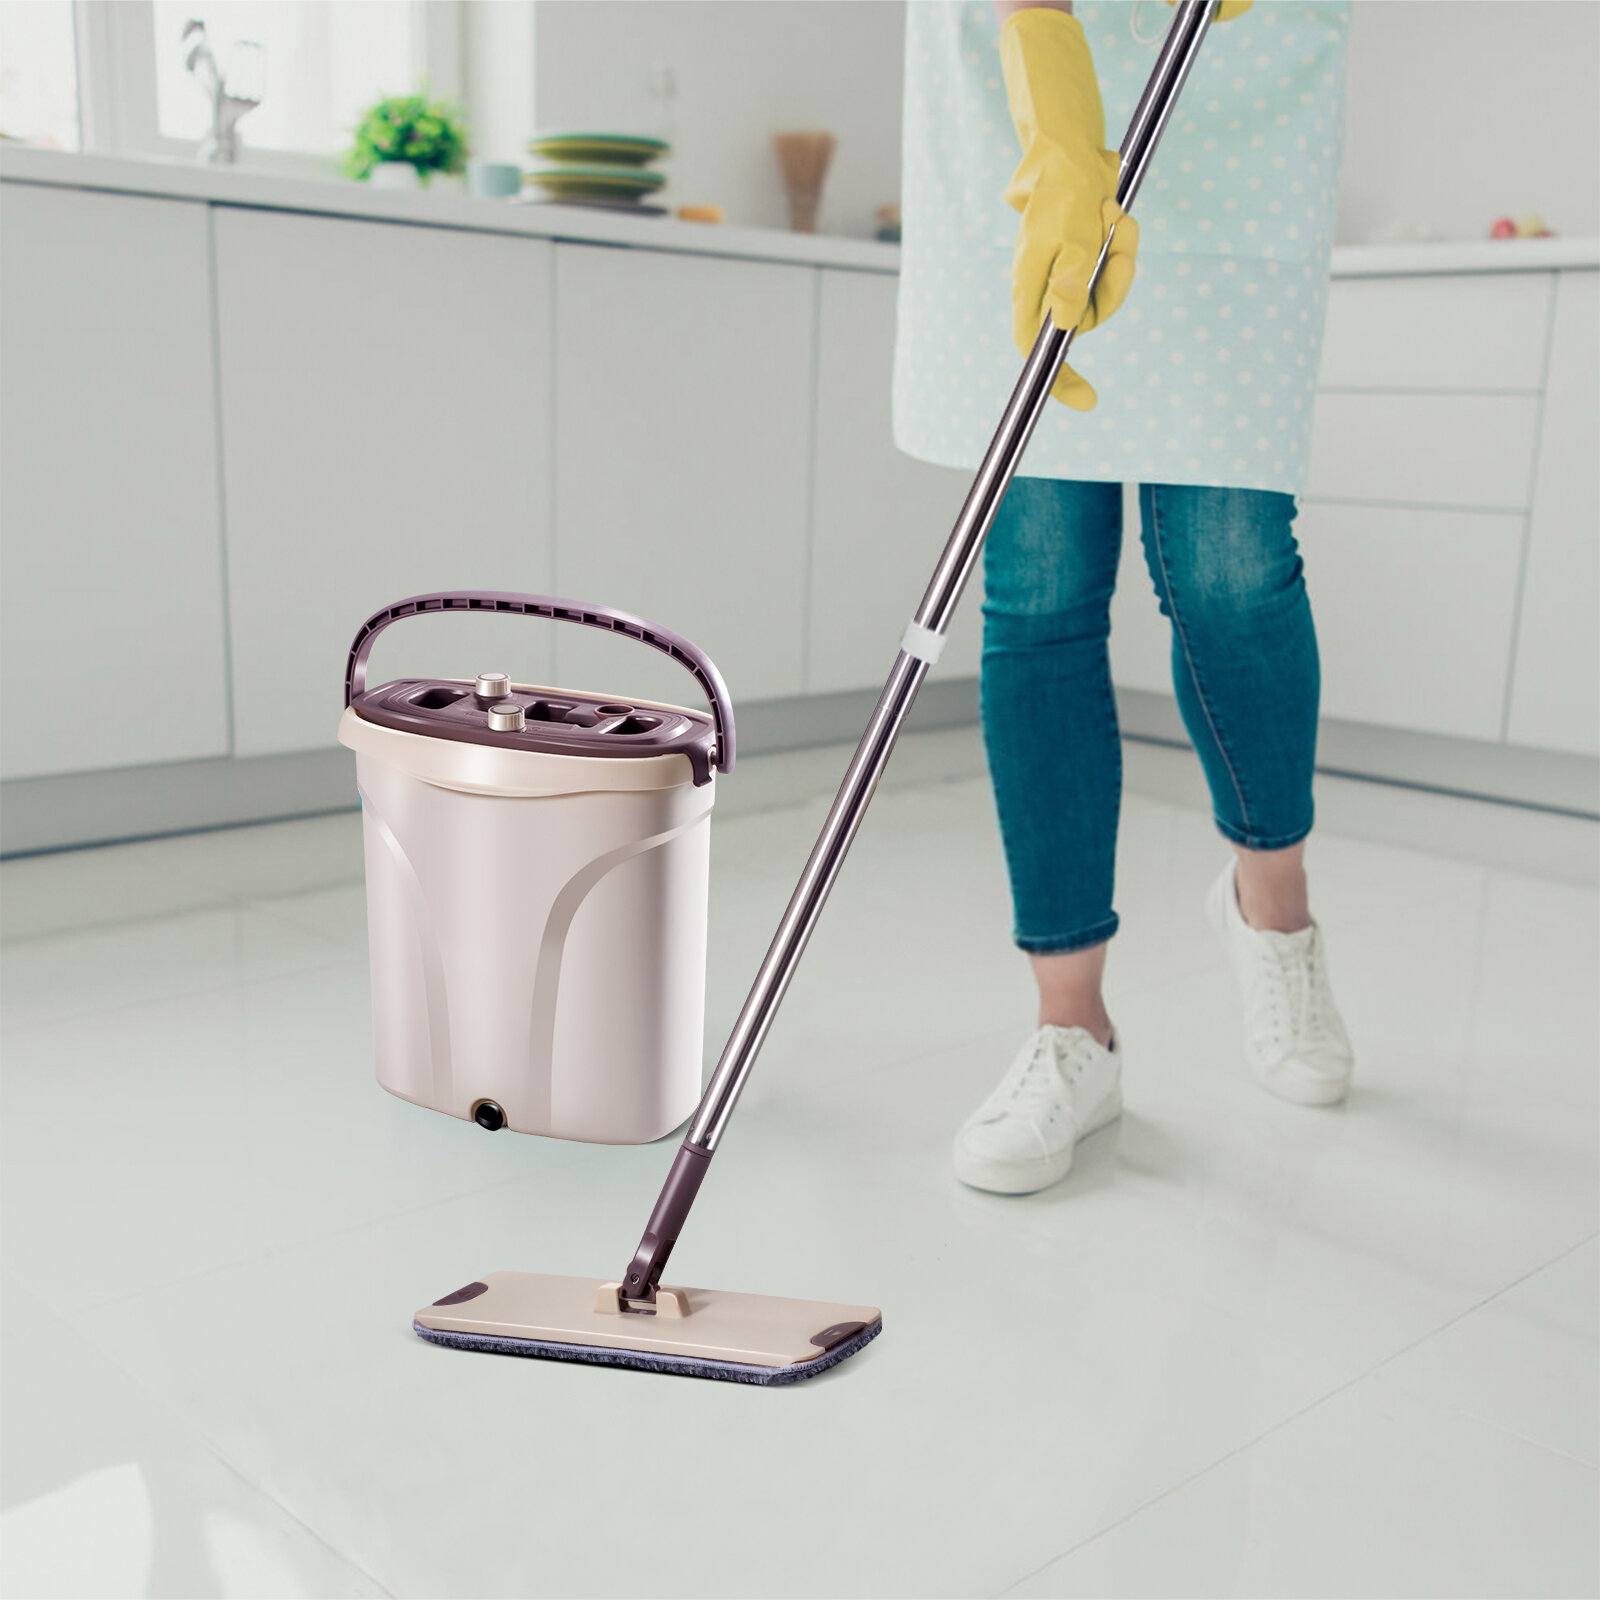 Self cleaning mop 2. Magic Flat Mop Bucket. Flat Mop. 5five Mop Flat with Bucket cz. Cleaning your self.